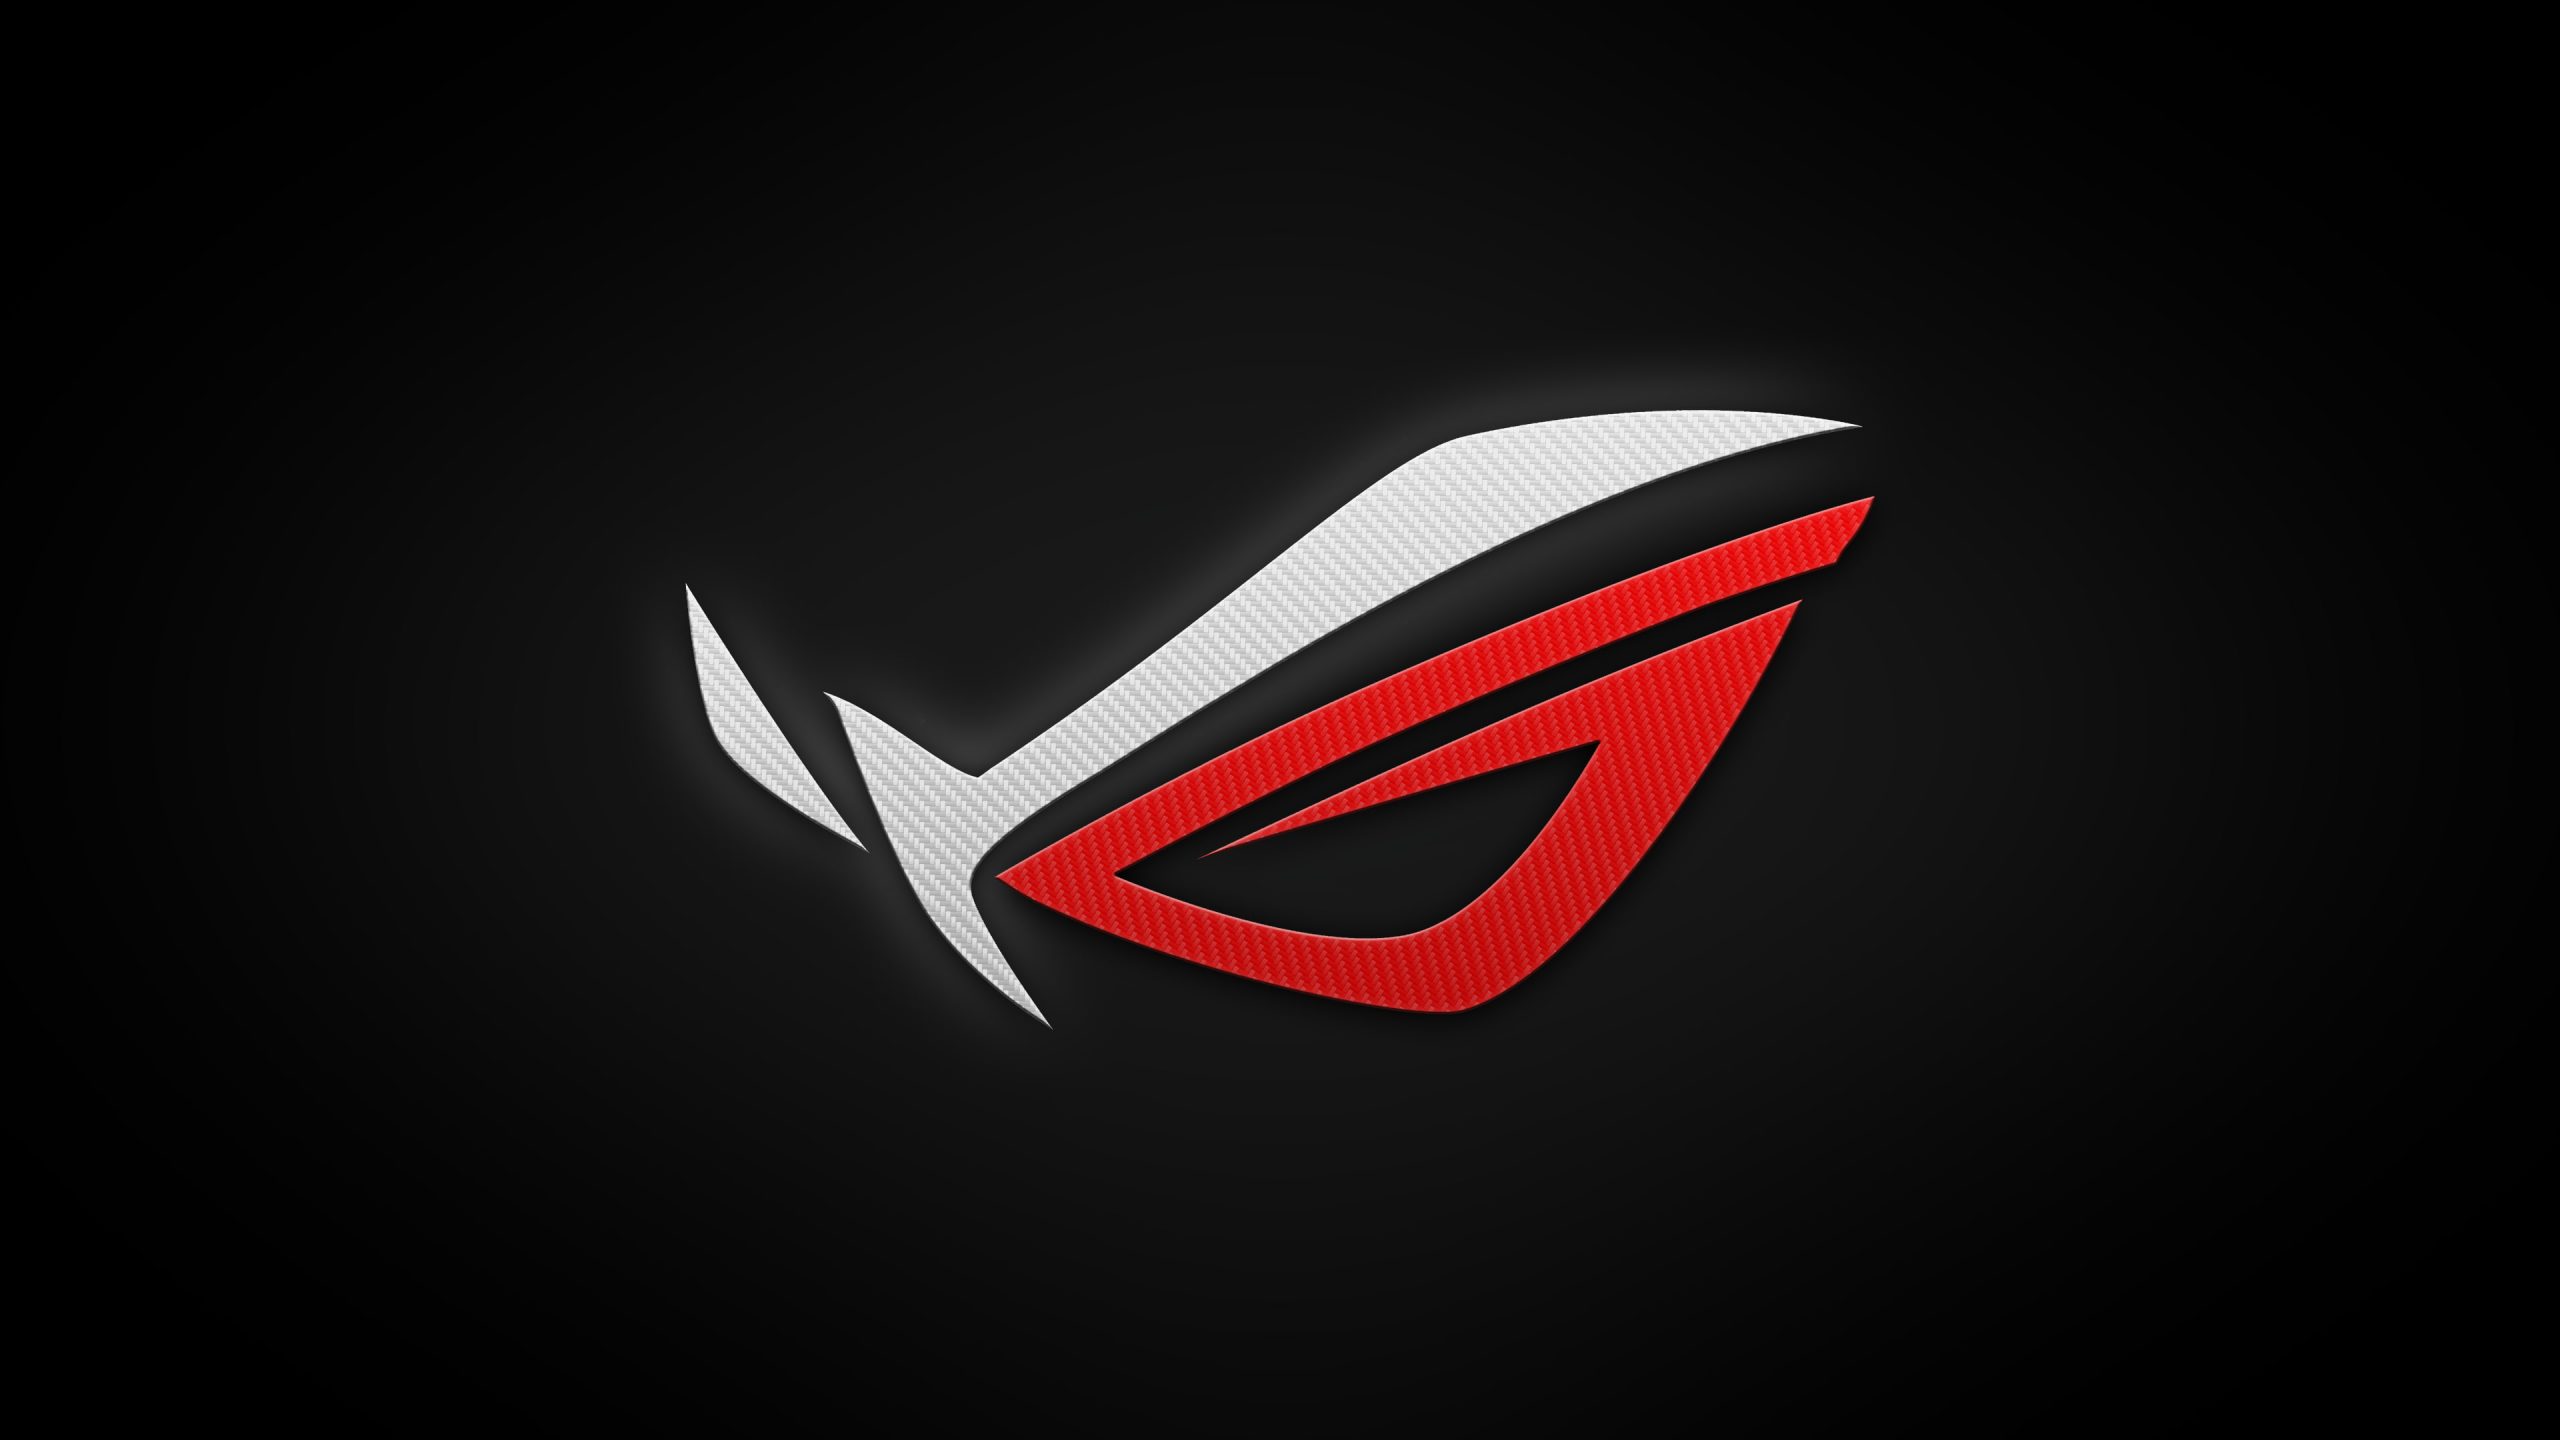 Asus ROG logo, Republic of Gamers, black background, illuminated